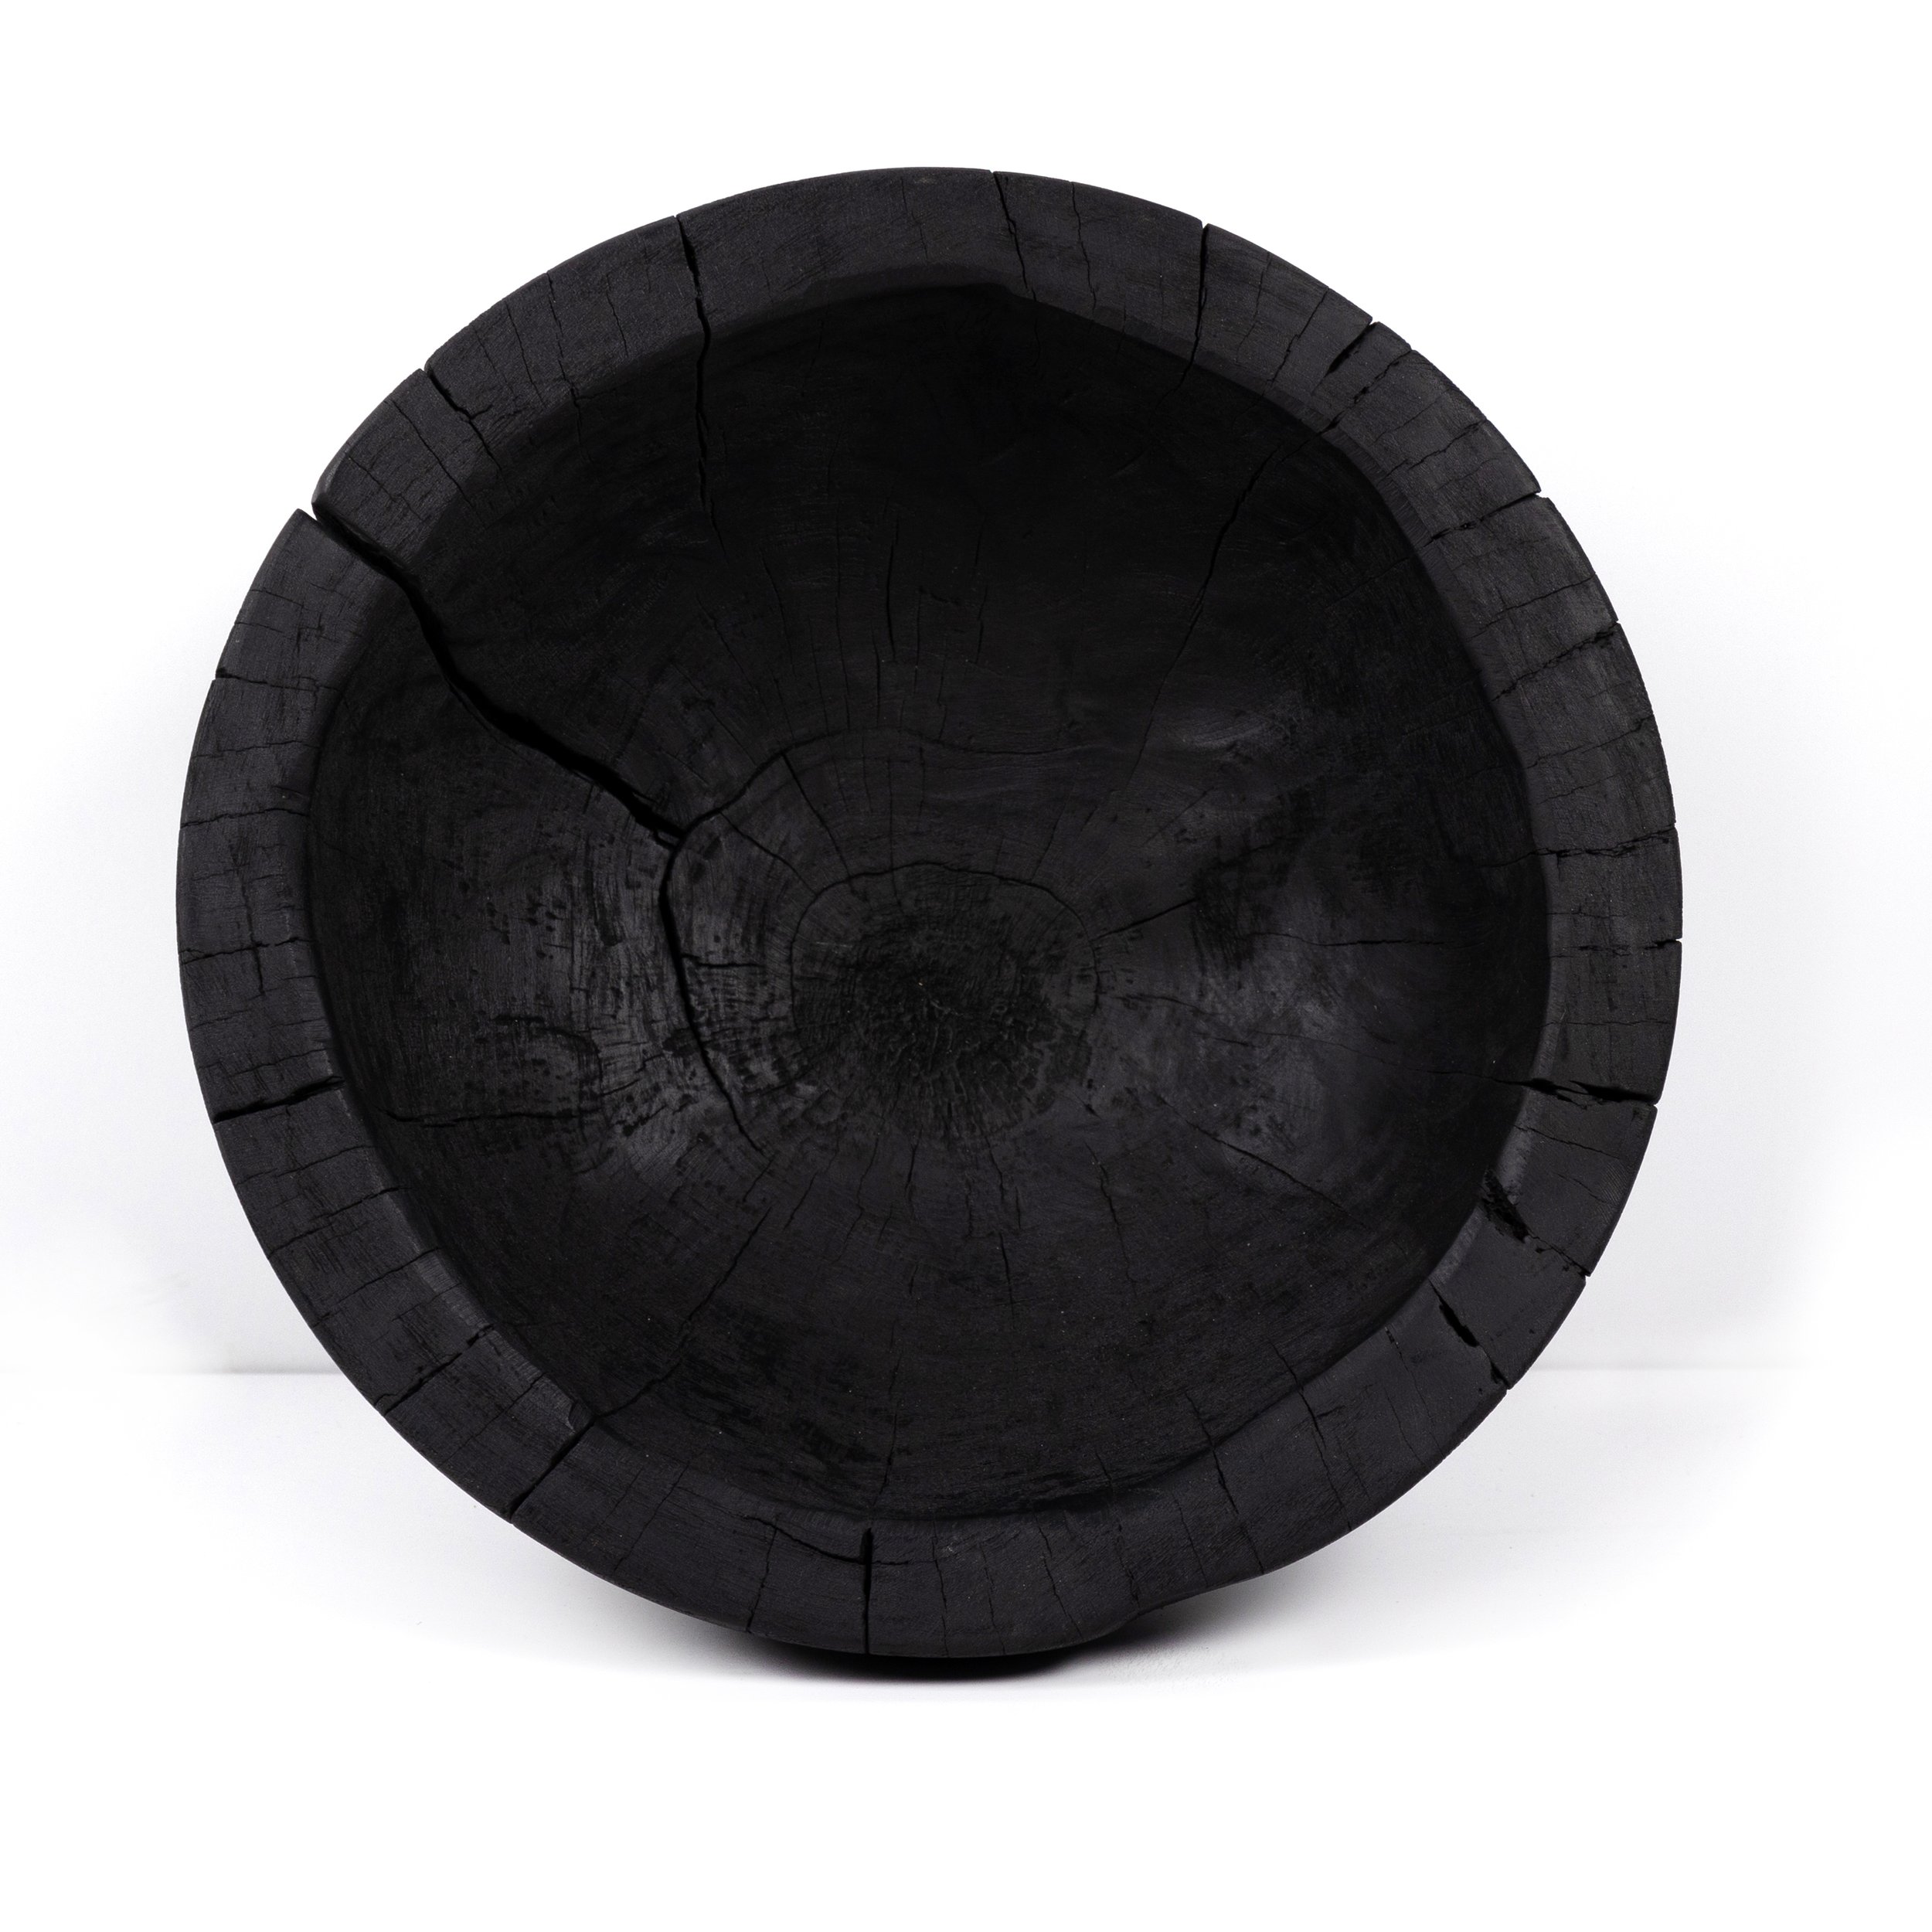 Carbonized Black Reclaimed Wood Bowl Top View.jpg